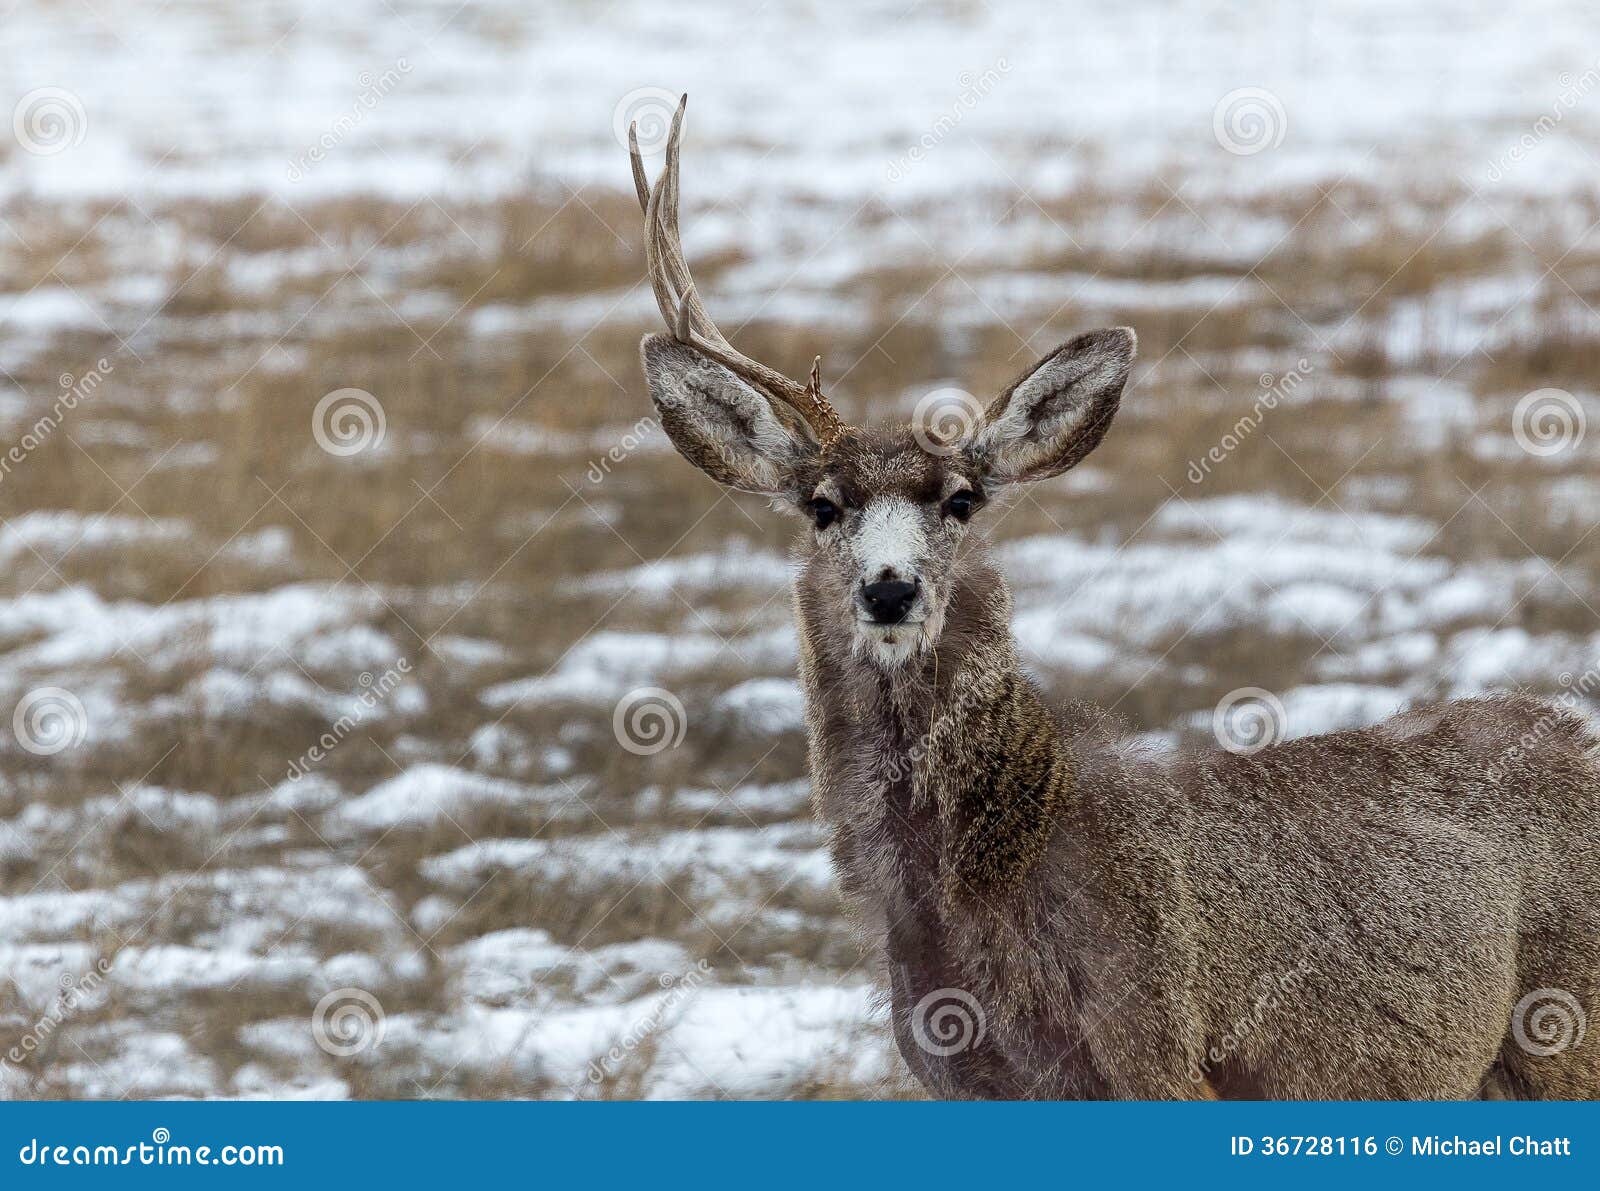 One Antlered Deer Royalty Free Stock Image - Image: 36728116